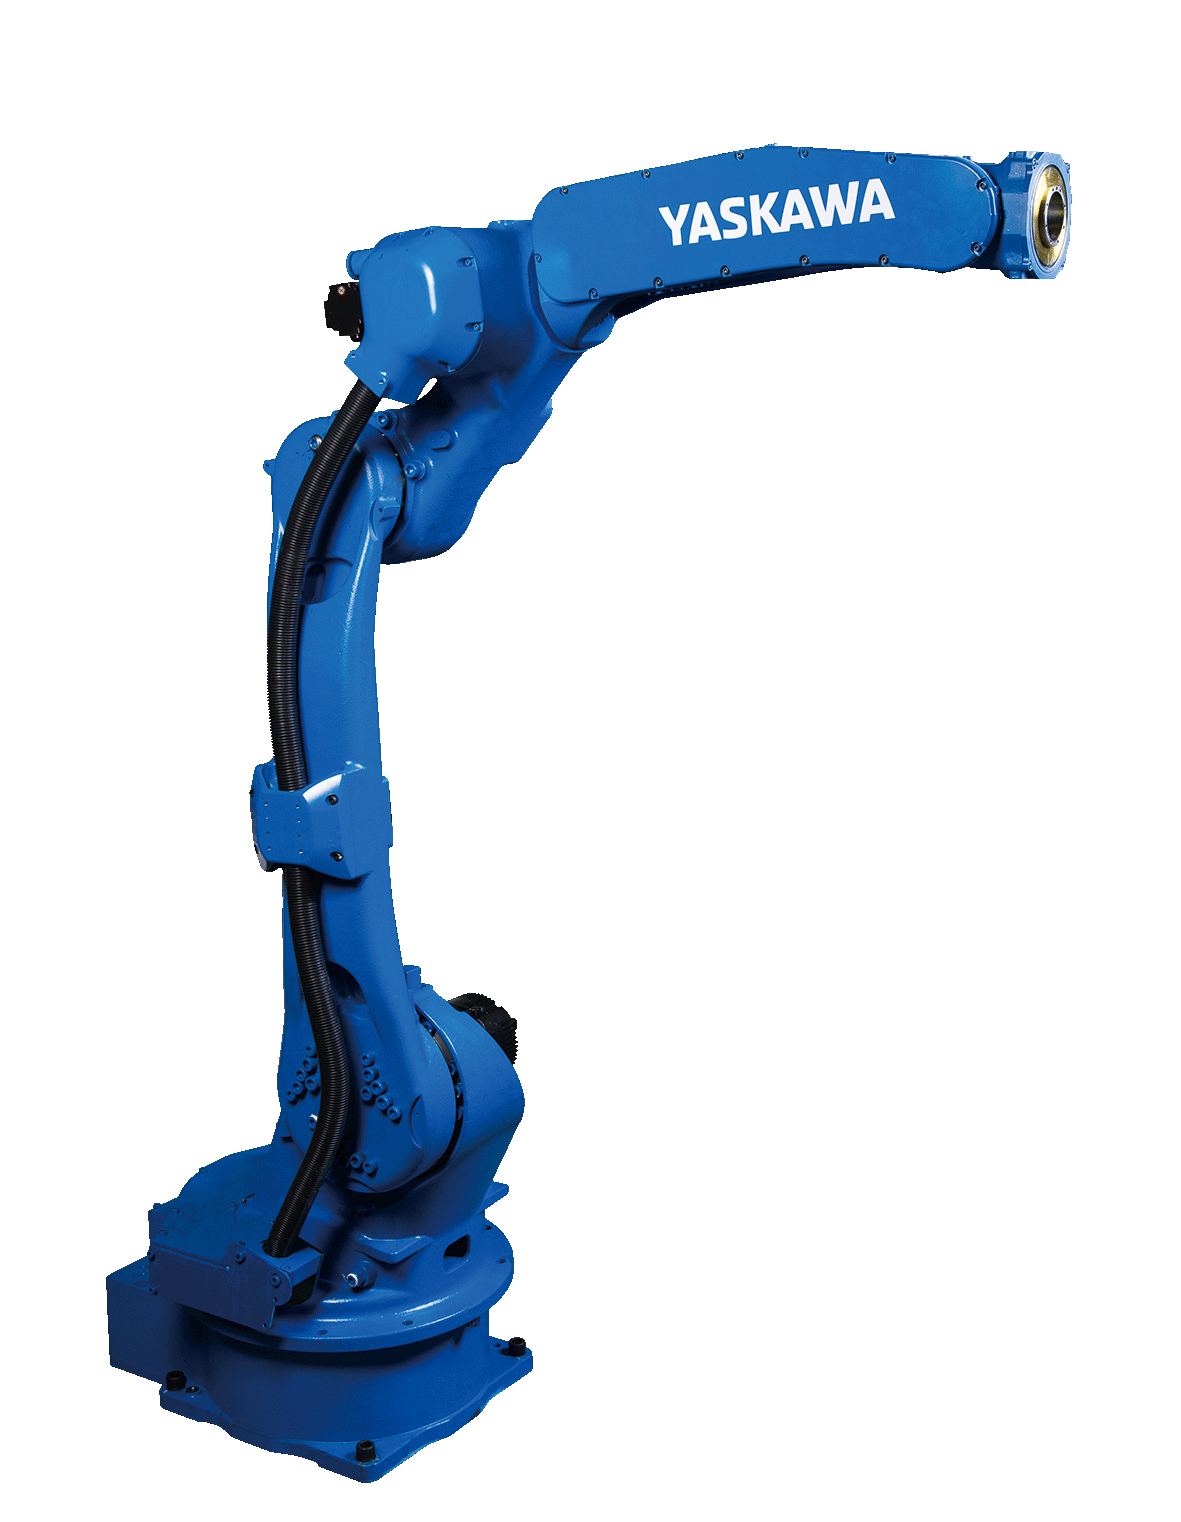 Industrial Robot Yaskawa Motoman GP25